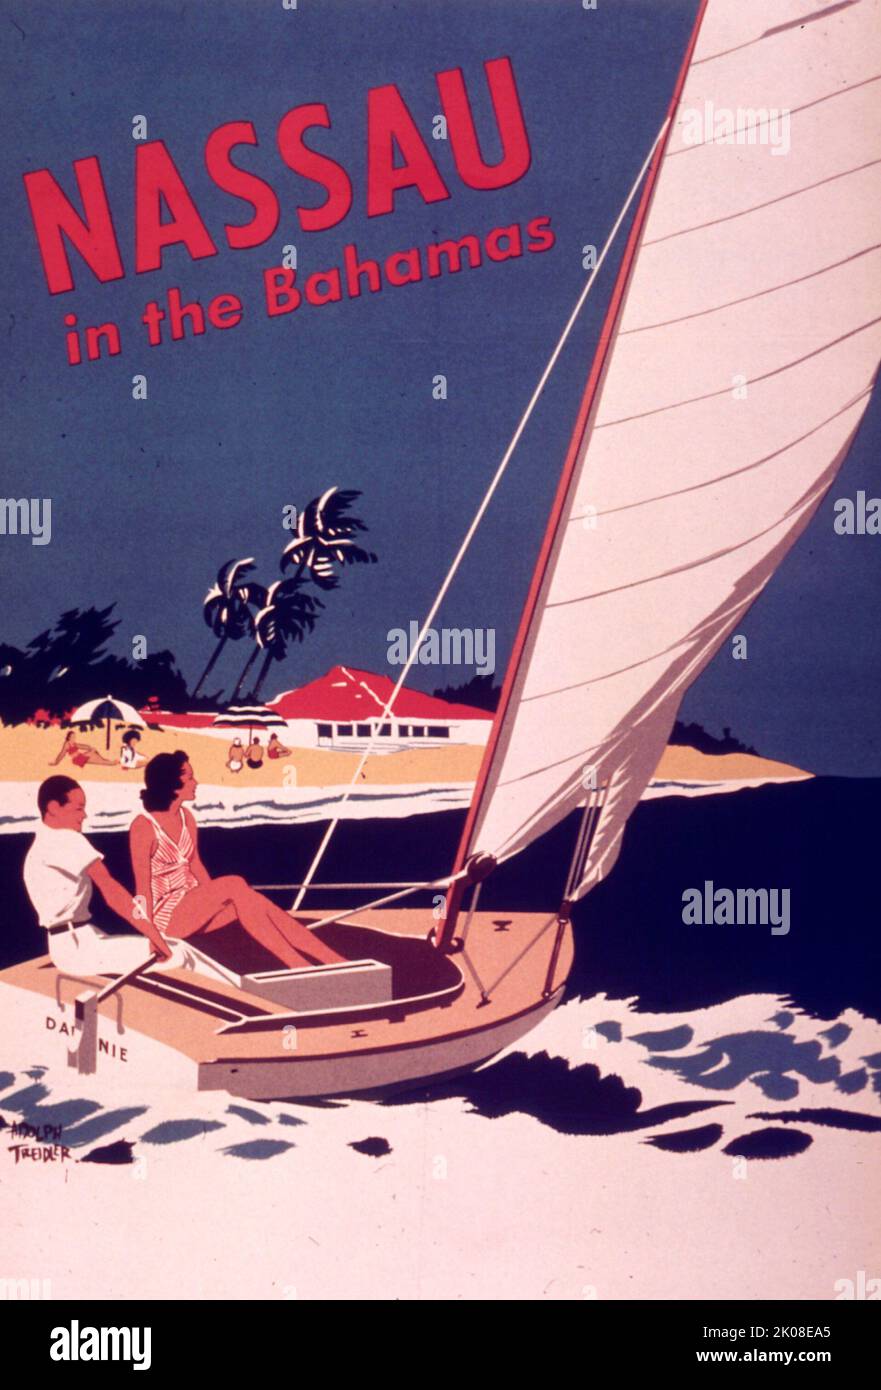 Nassau in the Bahamas - Cartel publicitario, 1940s Foto de stock